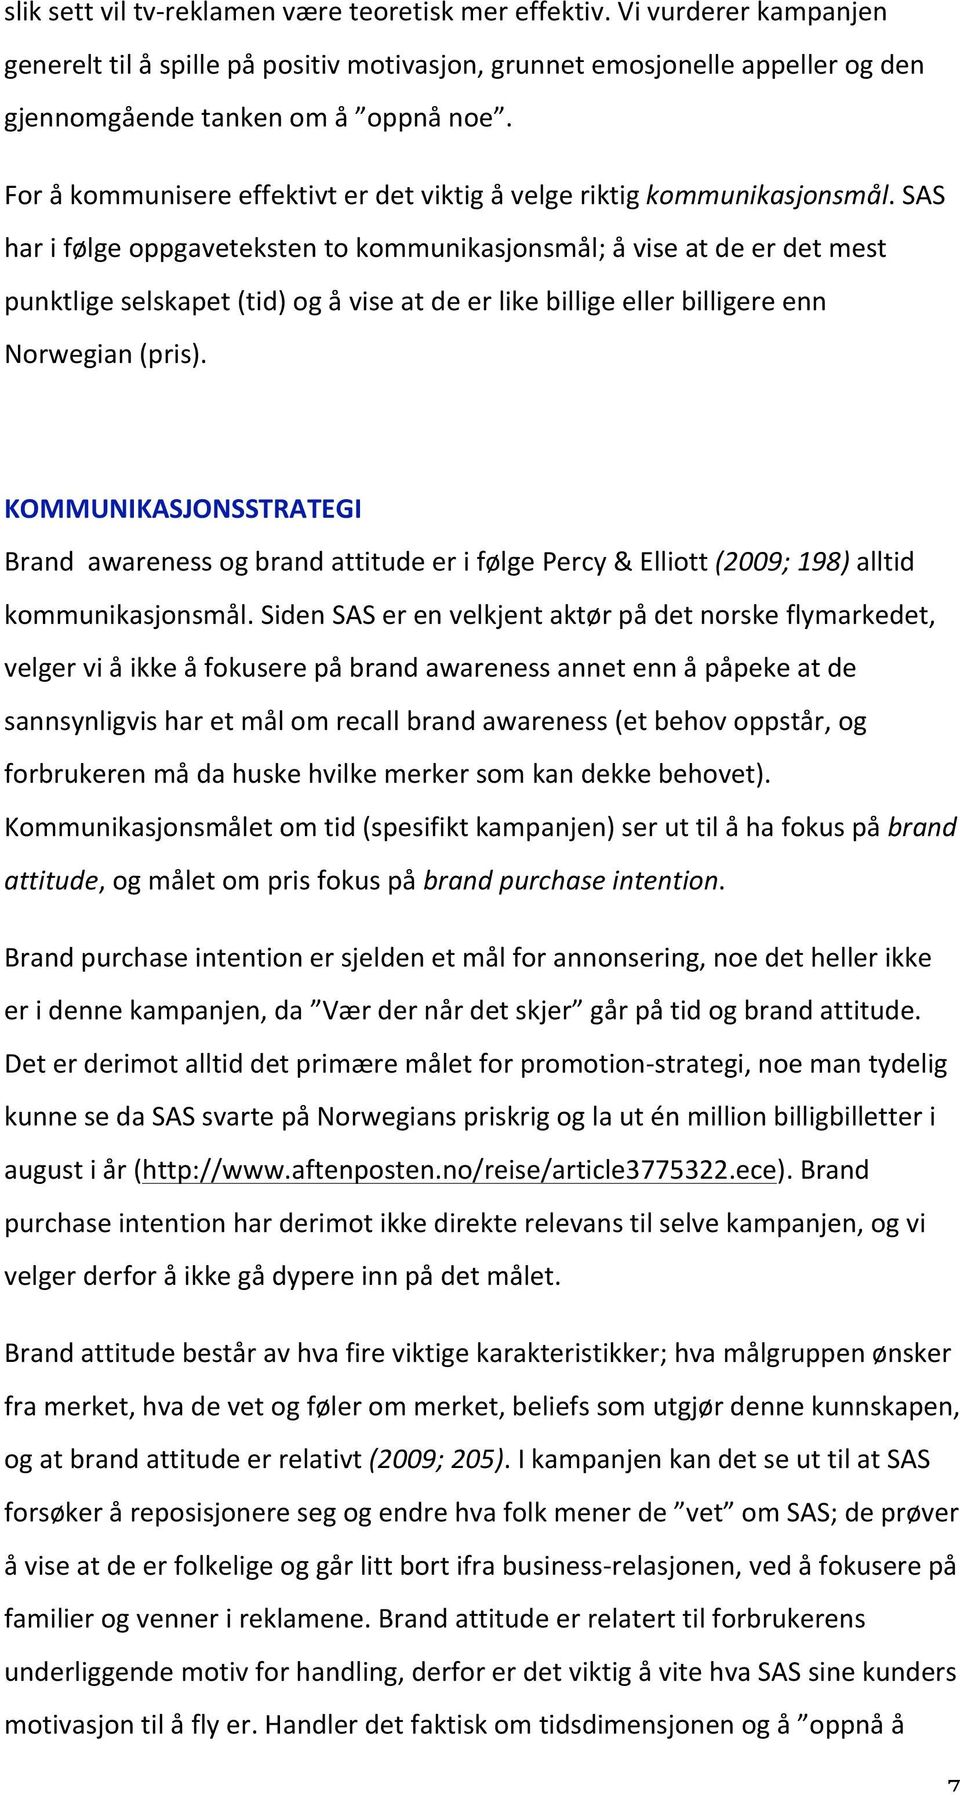 SAS harifølgeoppgavetekstentokommunikasjonsmål;åviseatdeerdetmest punktligeselskapet(tid)ogåviseatdeerlikebilligeellerbilligereenn Norwegian(pris).